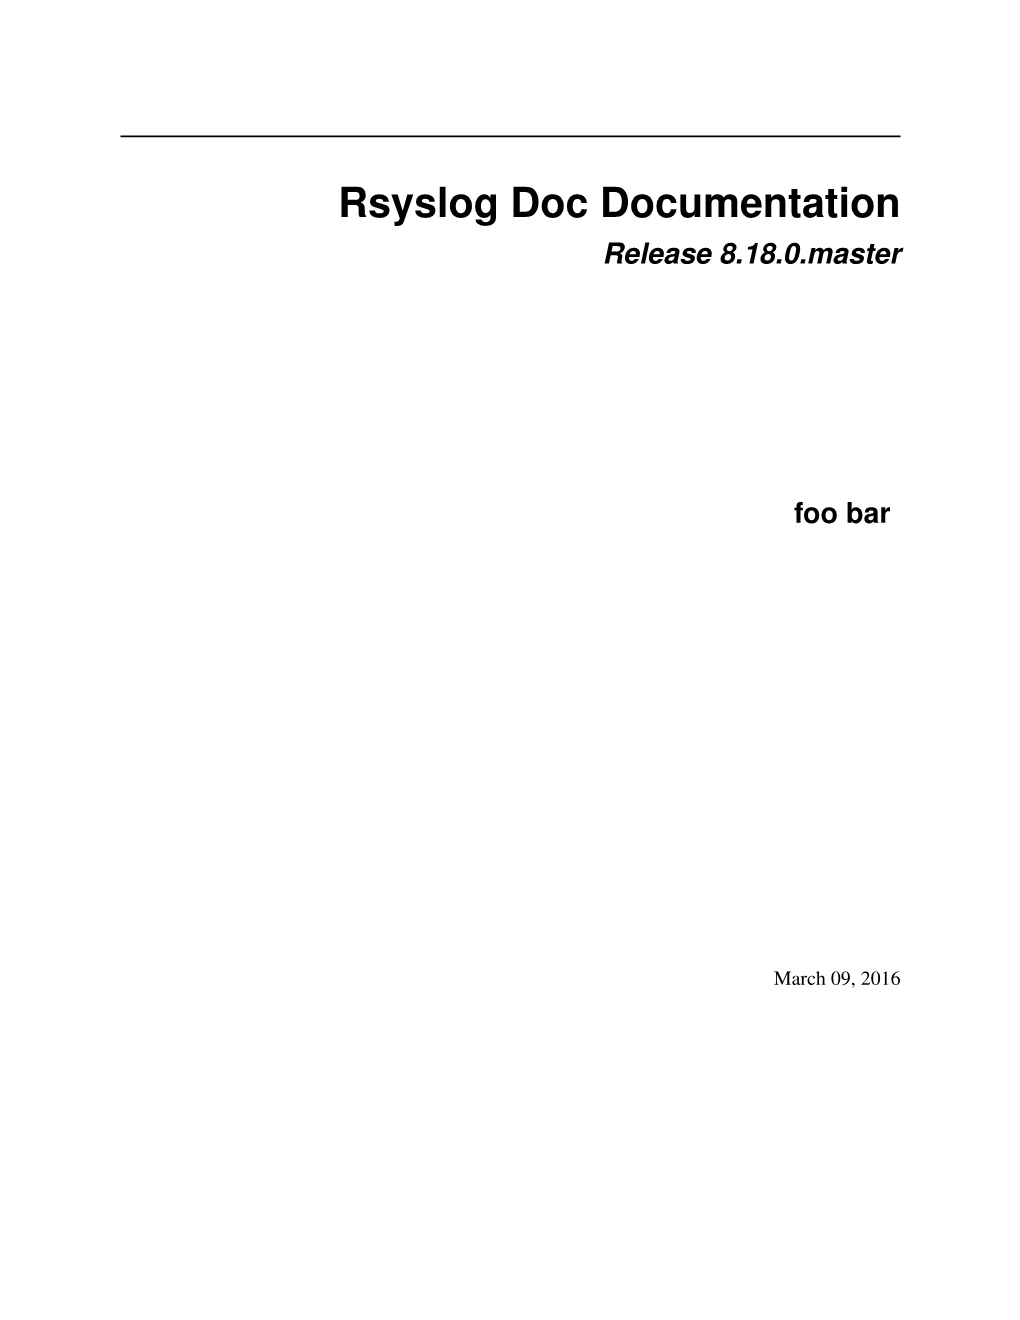 Rsyslog Doc Documentation Release 8.18.0.Master